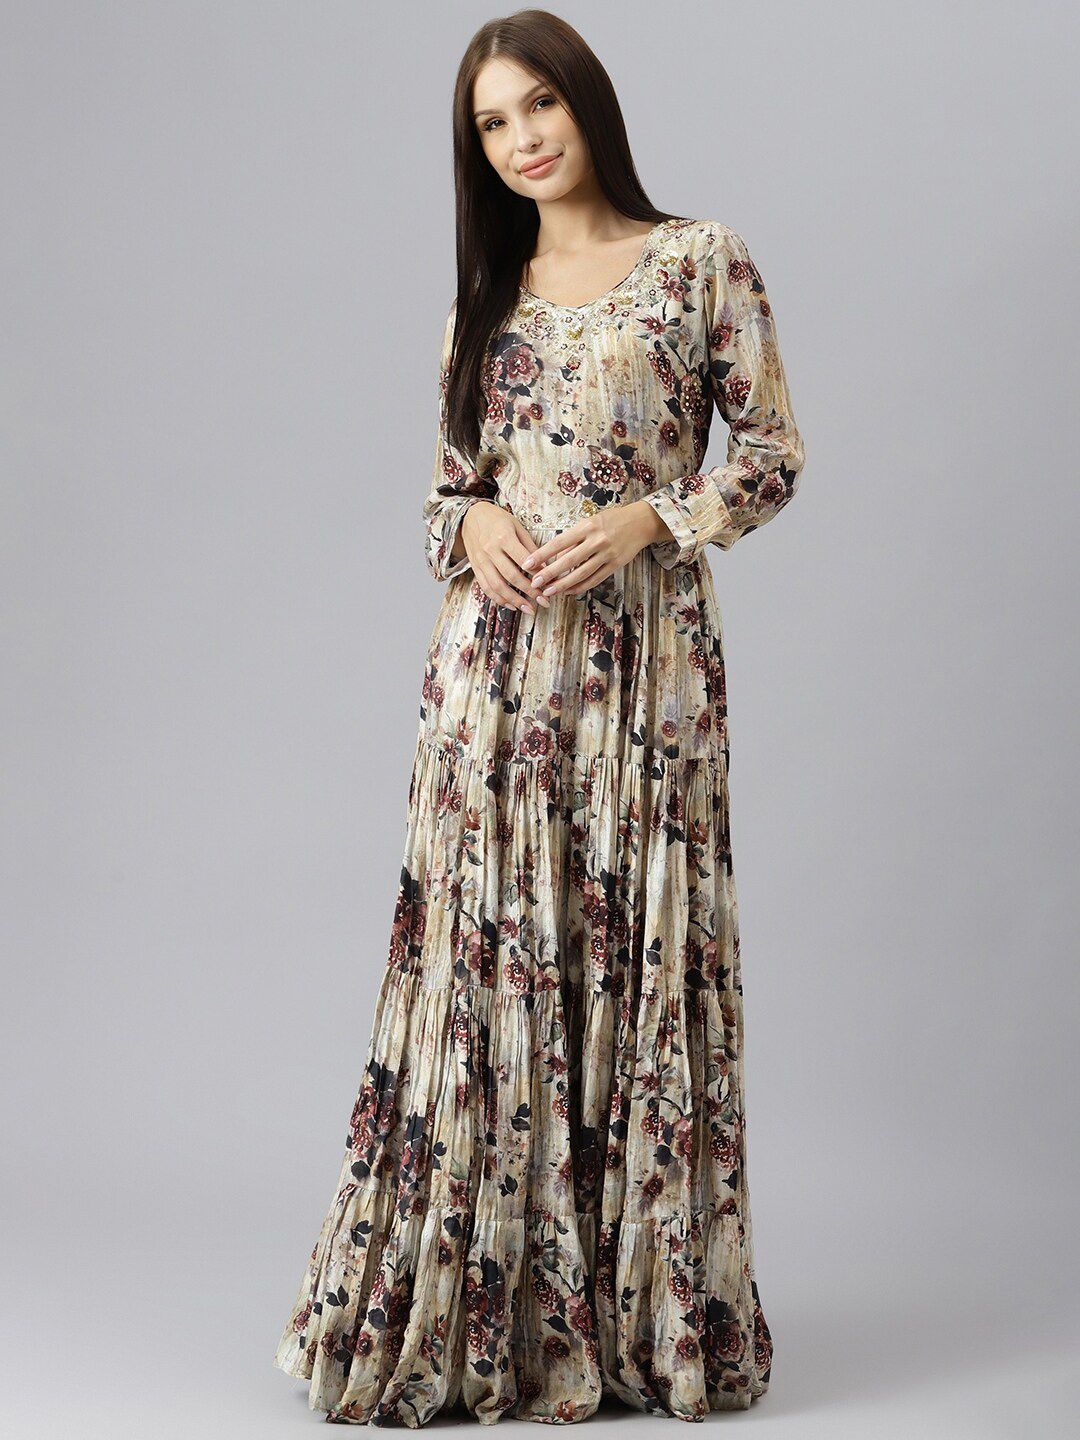 Chandbaali Floral Print Bell Sleeve Satin Maxi Dress Price in India